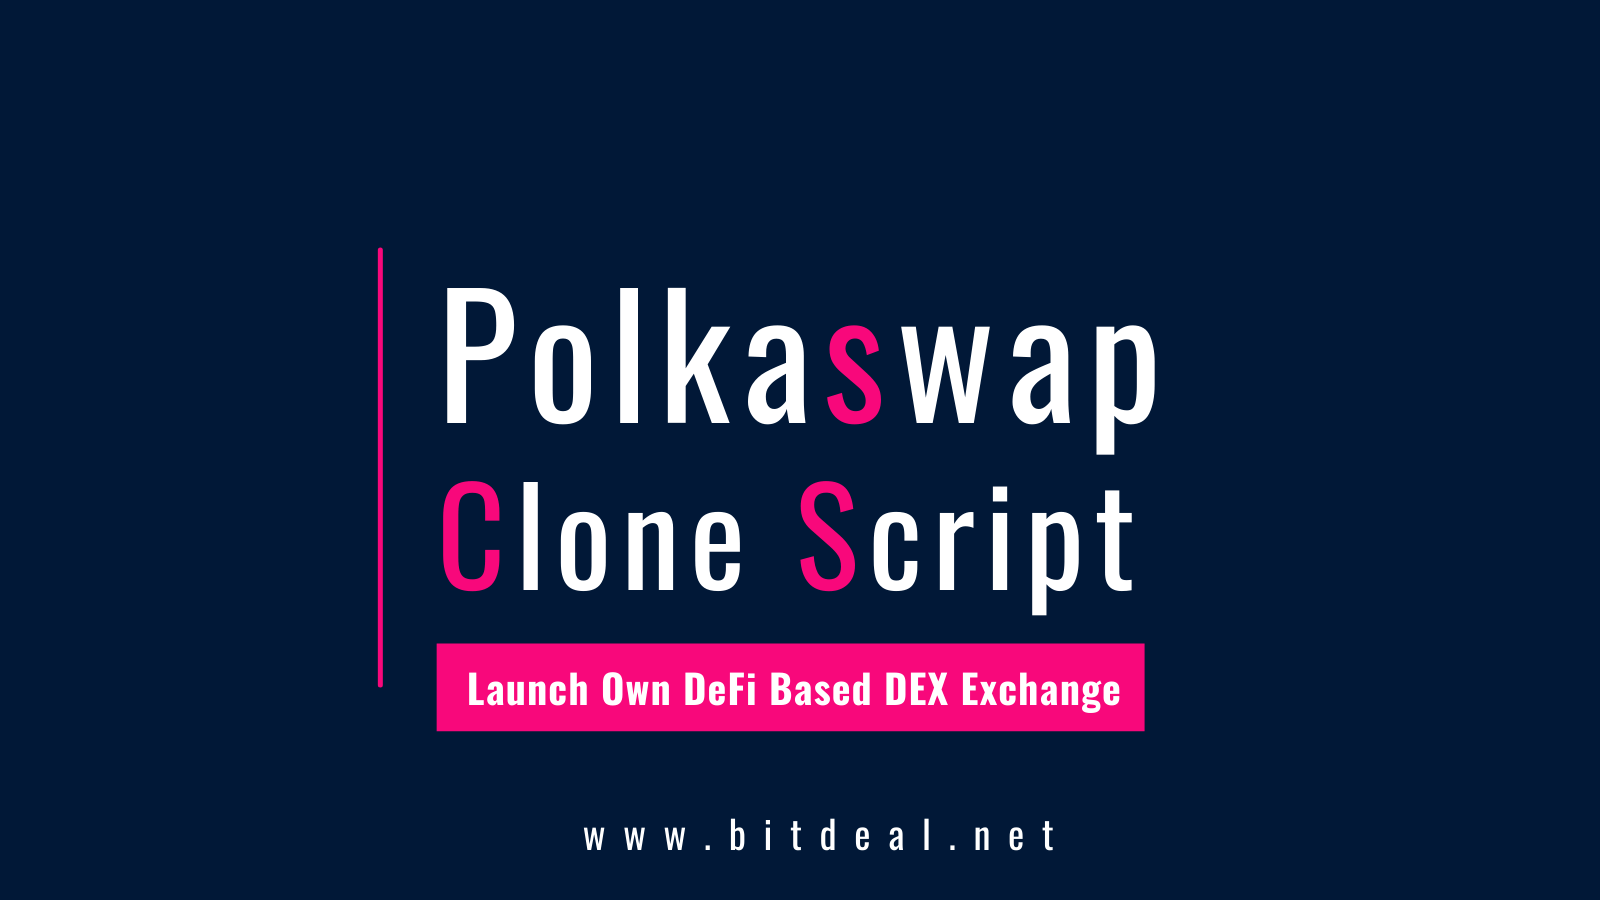 Polkaswap Clone  Script - The Perfect Strategy to build a Defi based DEX Exchange like Polkaswap